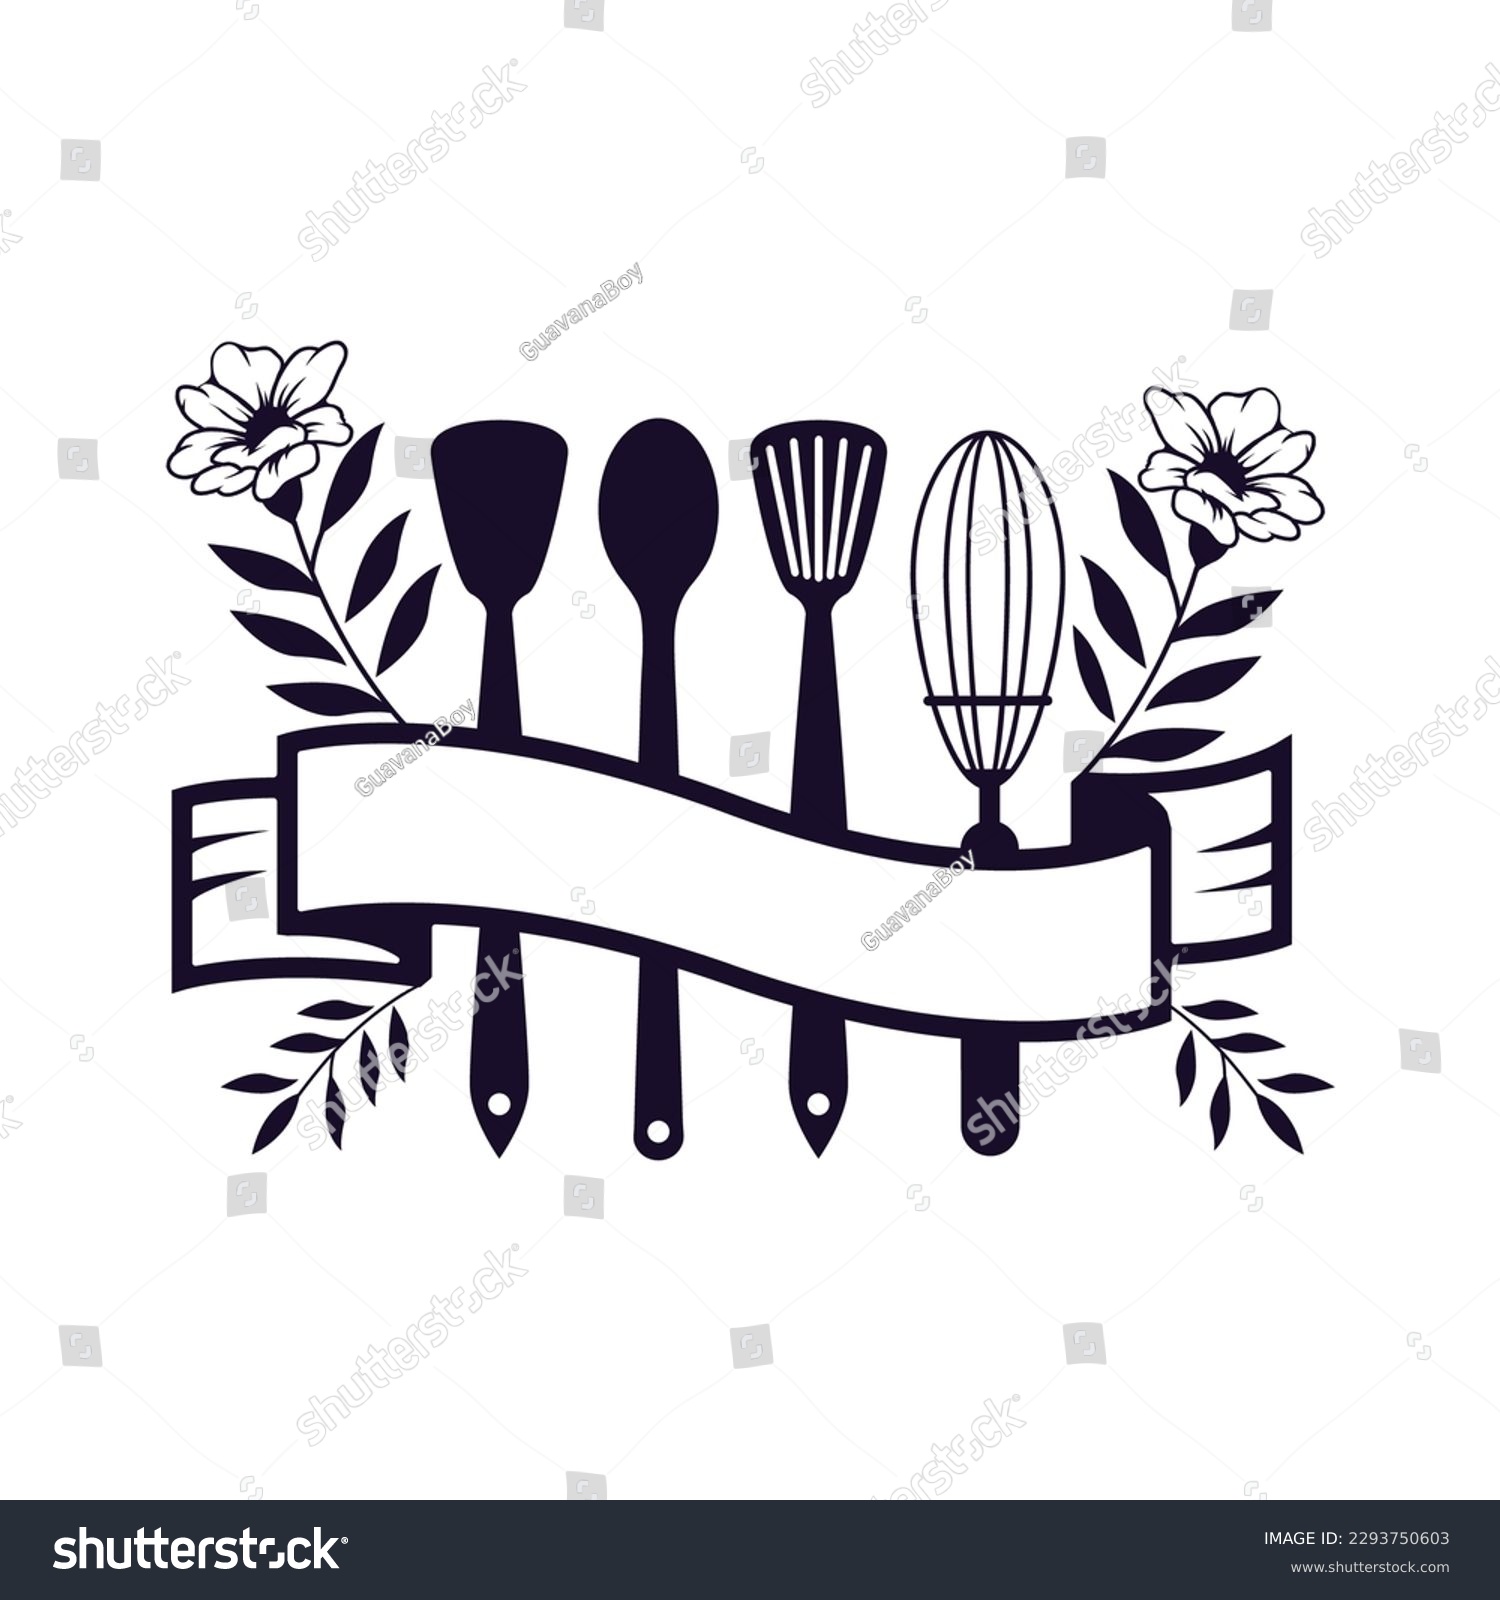 SVG of Retro kitchen utensil tools logo design. Kitchen tools clipart SVG. Vector illustration svg